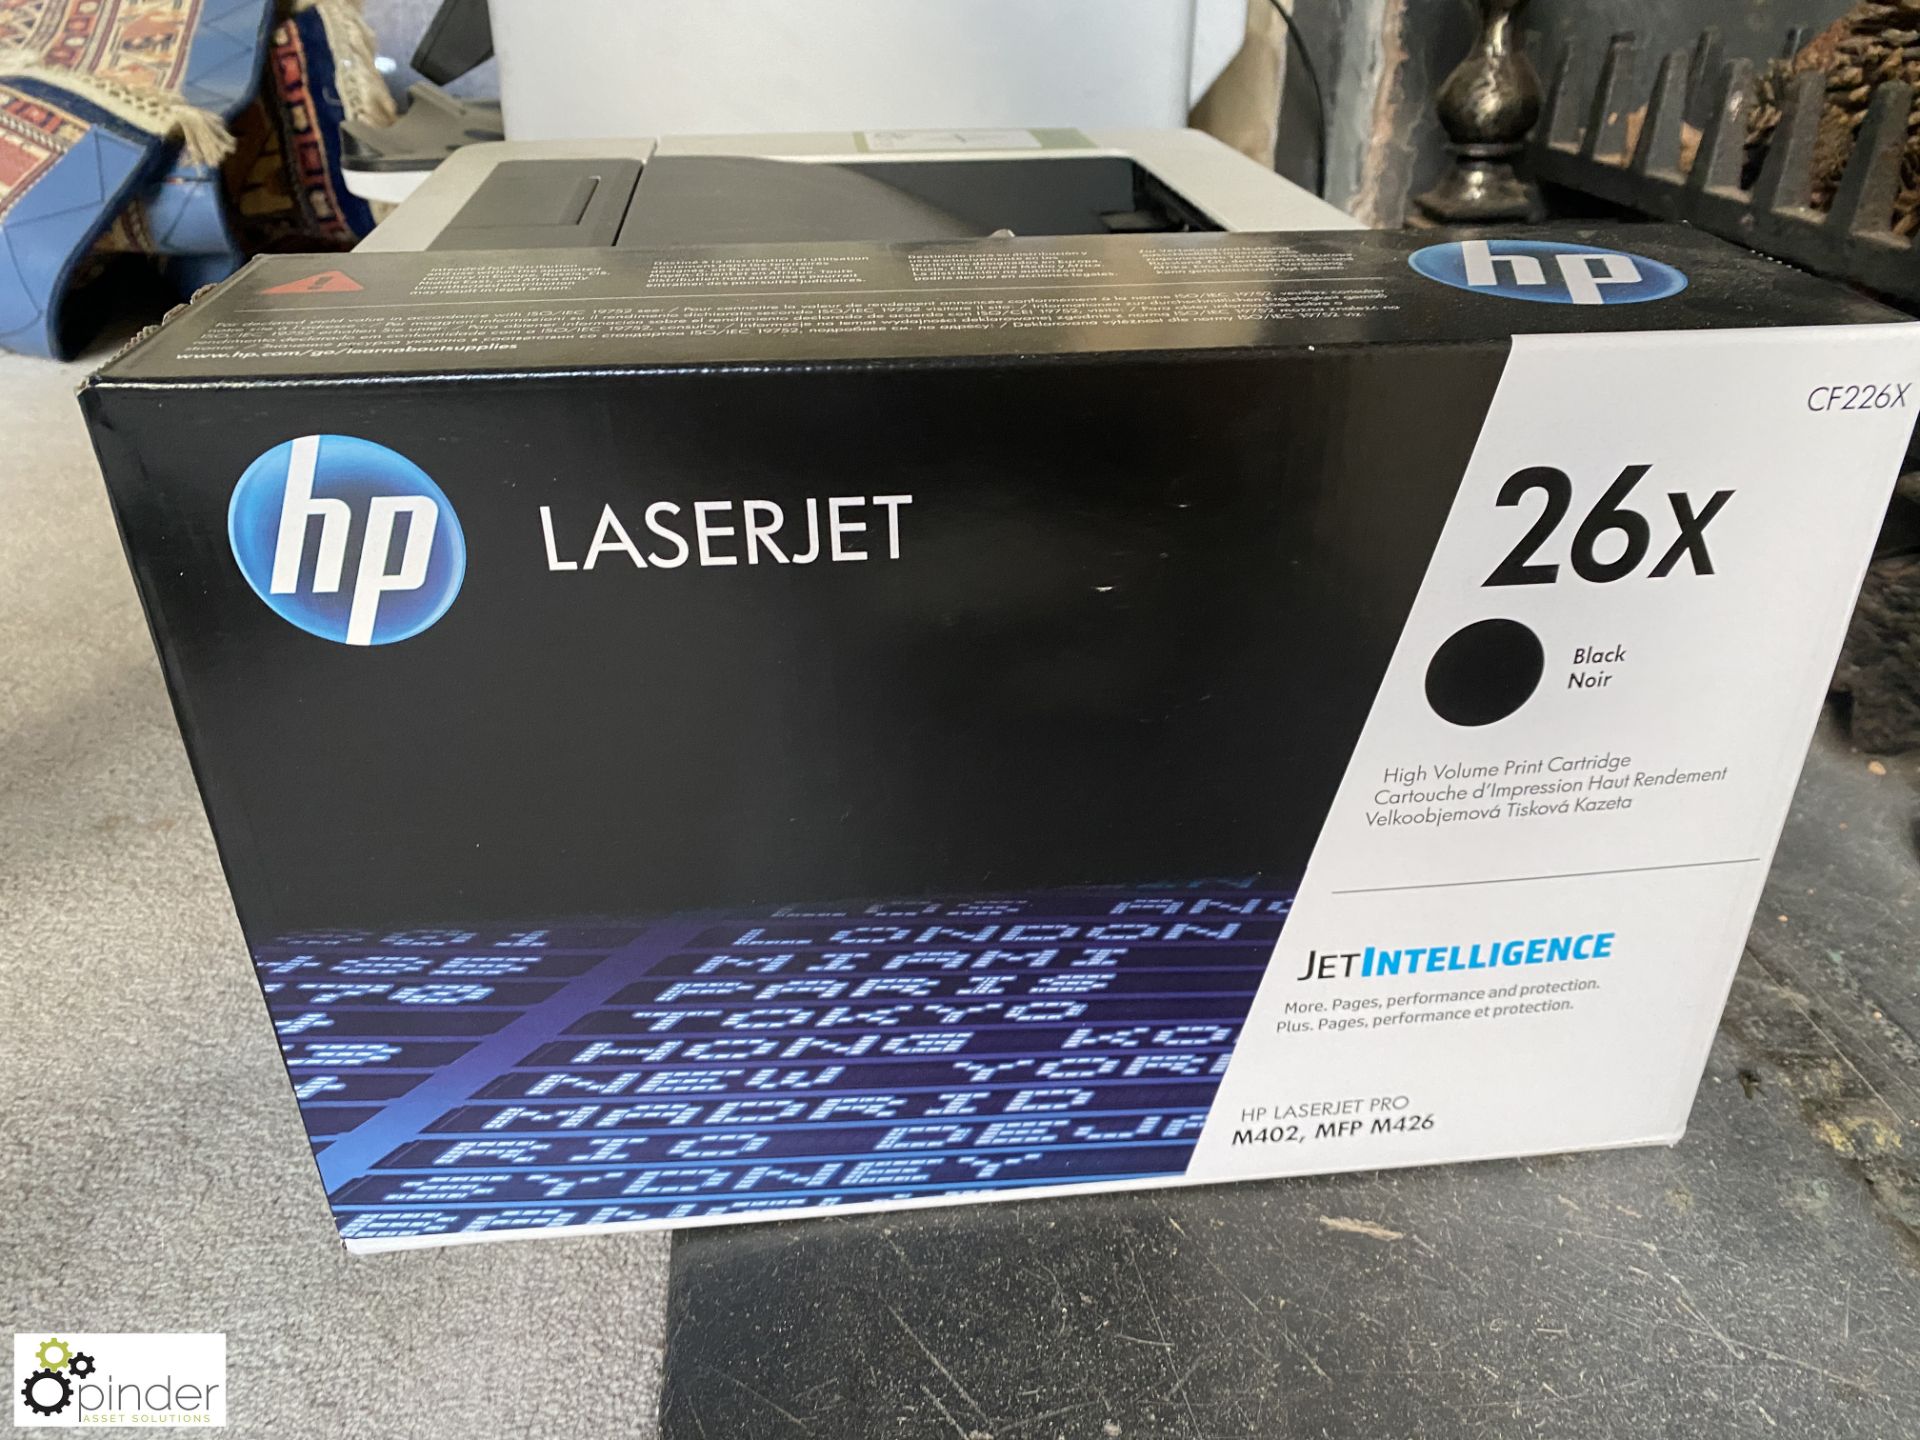 HP Laserjet M402 dne Laser Printer, with CF226X print cartridge, black, boxed and unused ( - Image 3 of 4